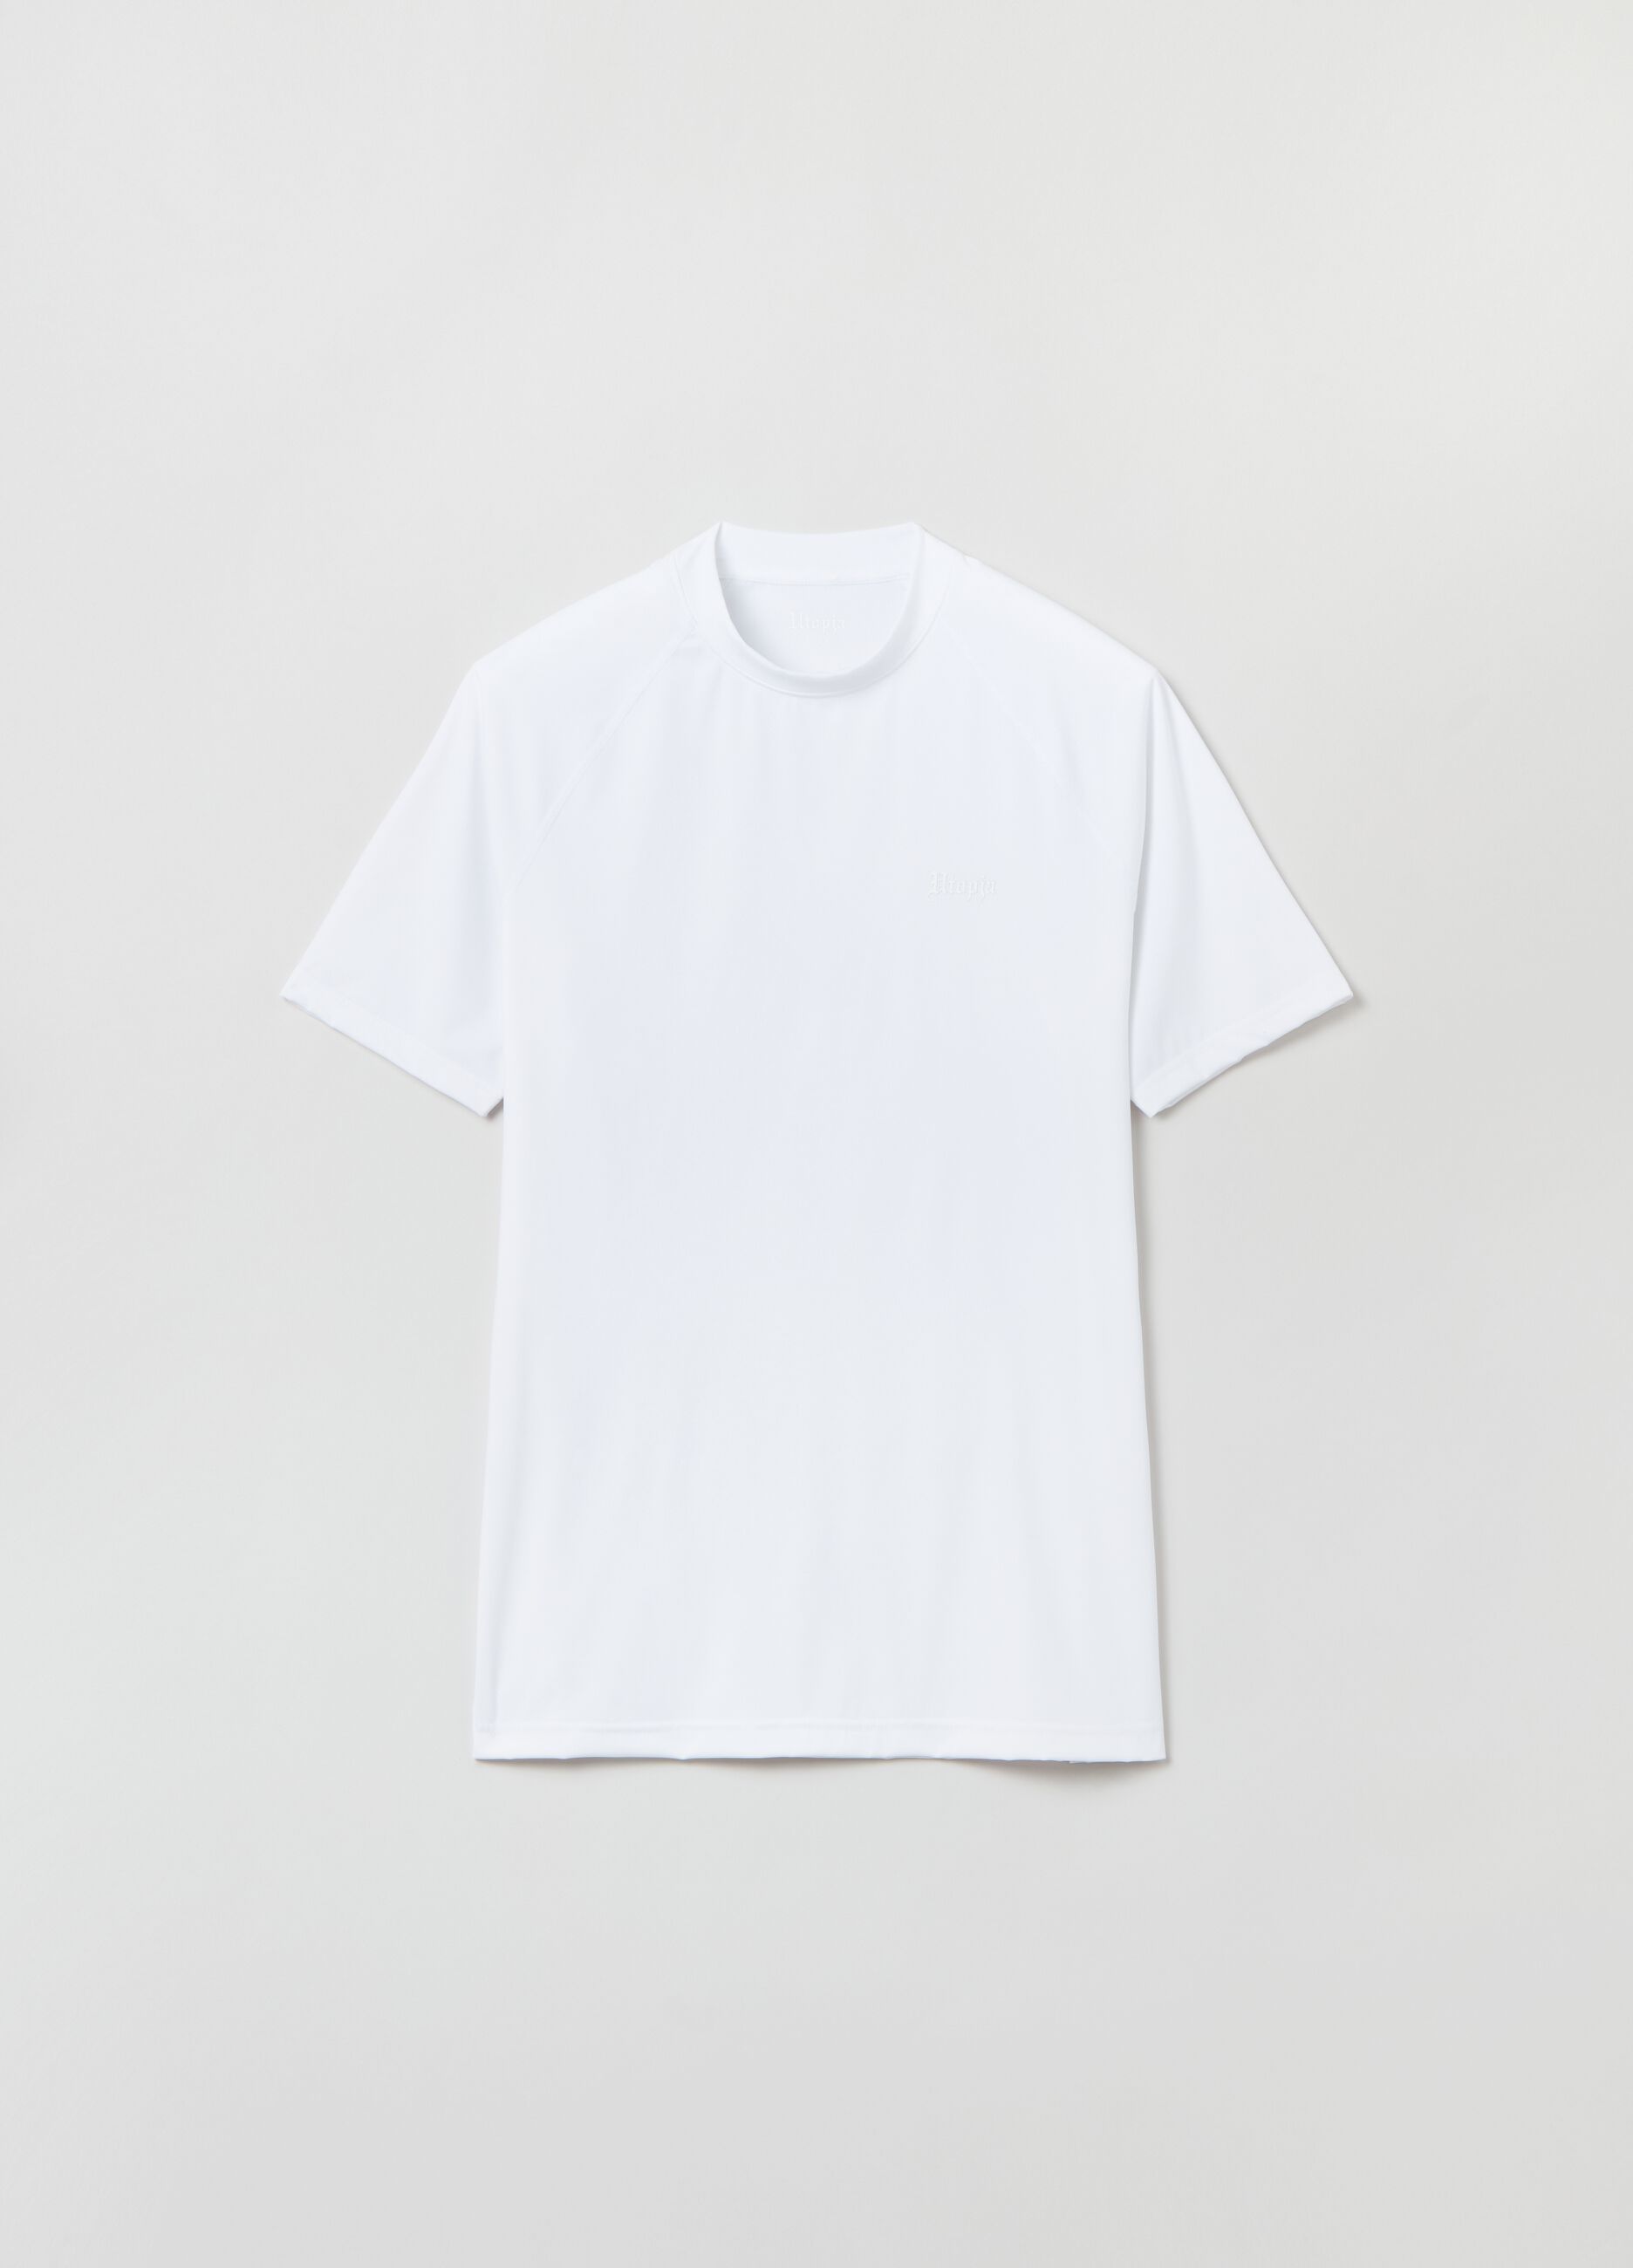 Technical T-shirt White_6